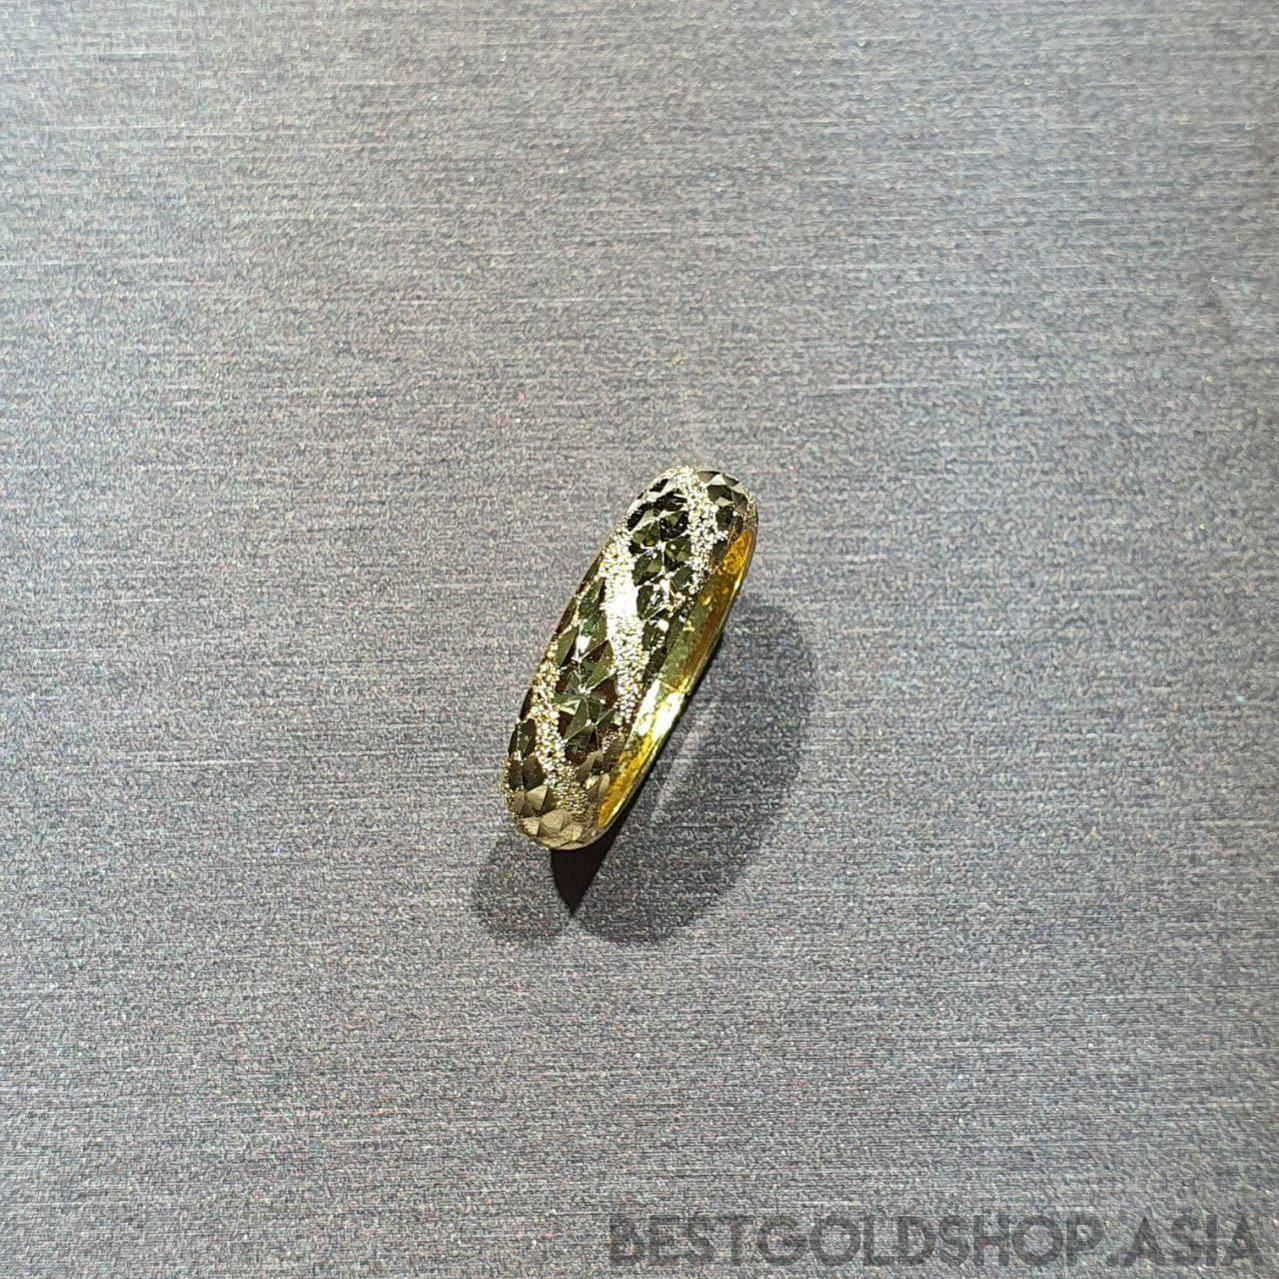 New Batch and design 22k / 916 Gold Hollow ring V1-916 gold-Best Gold Shop